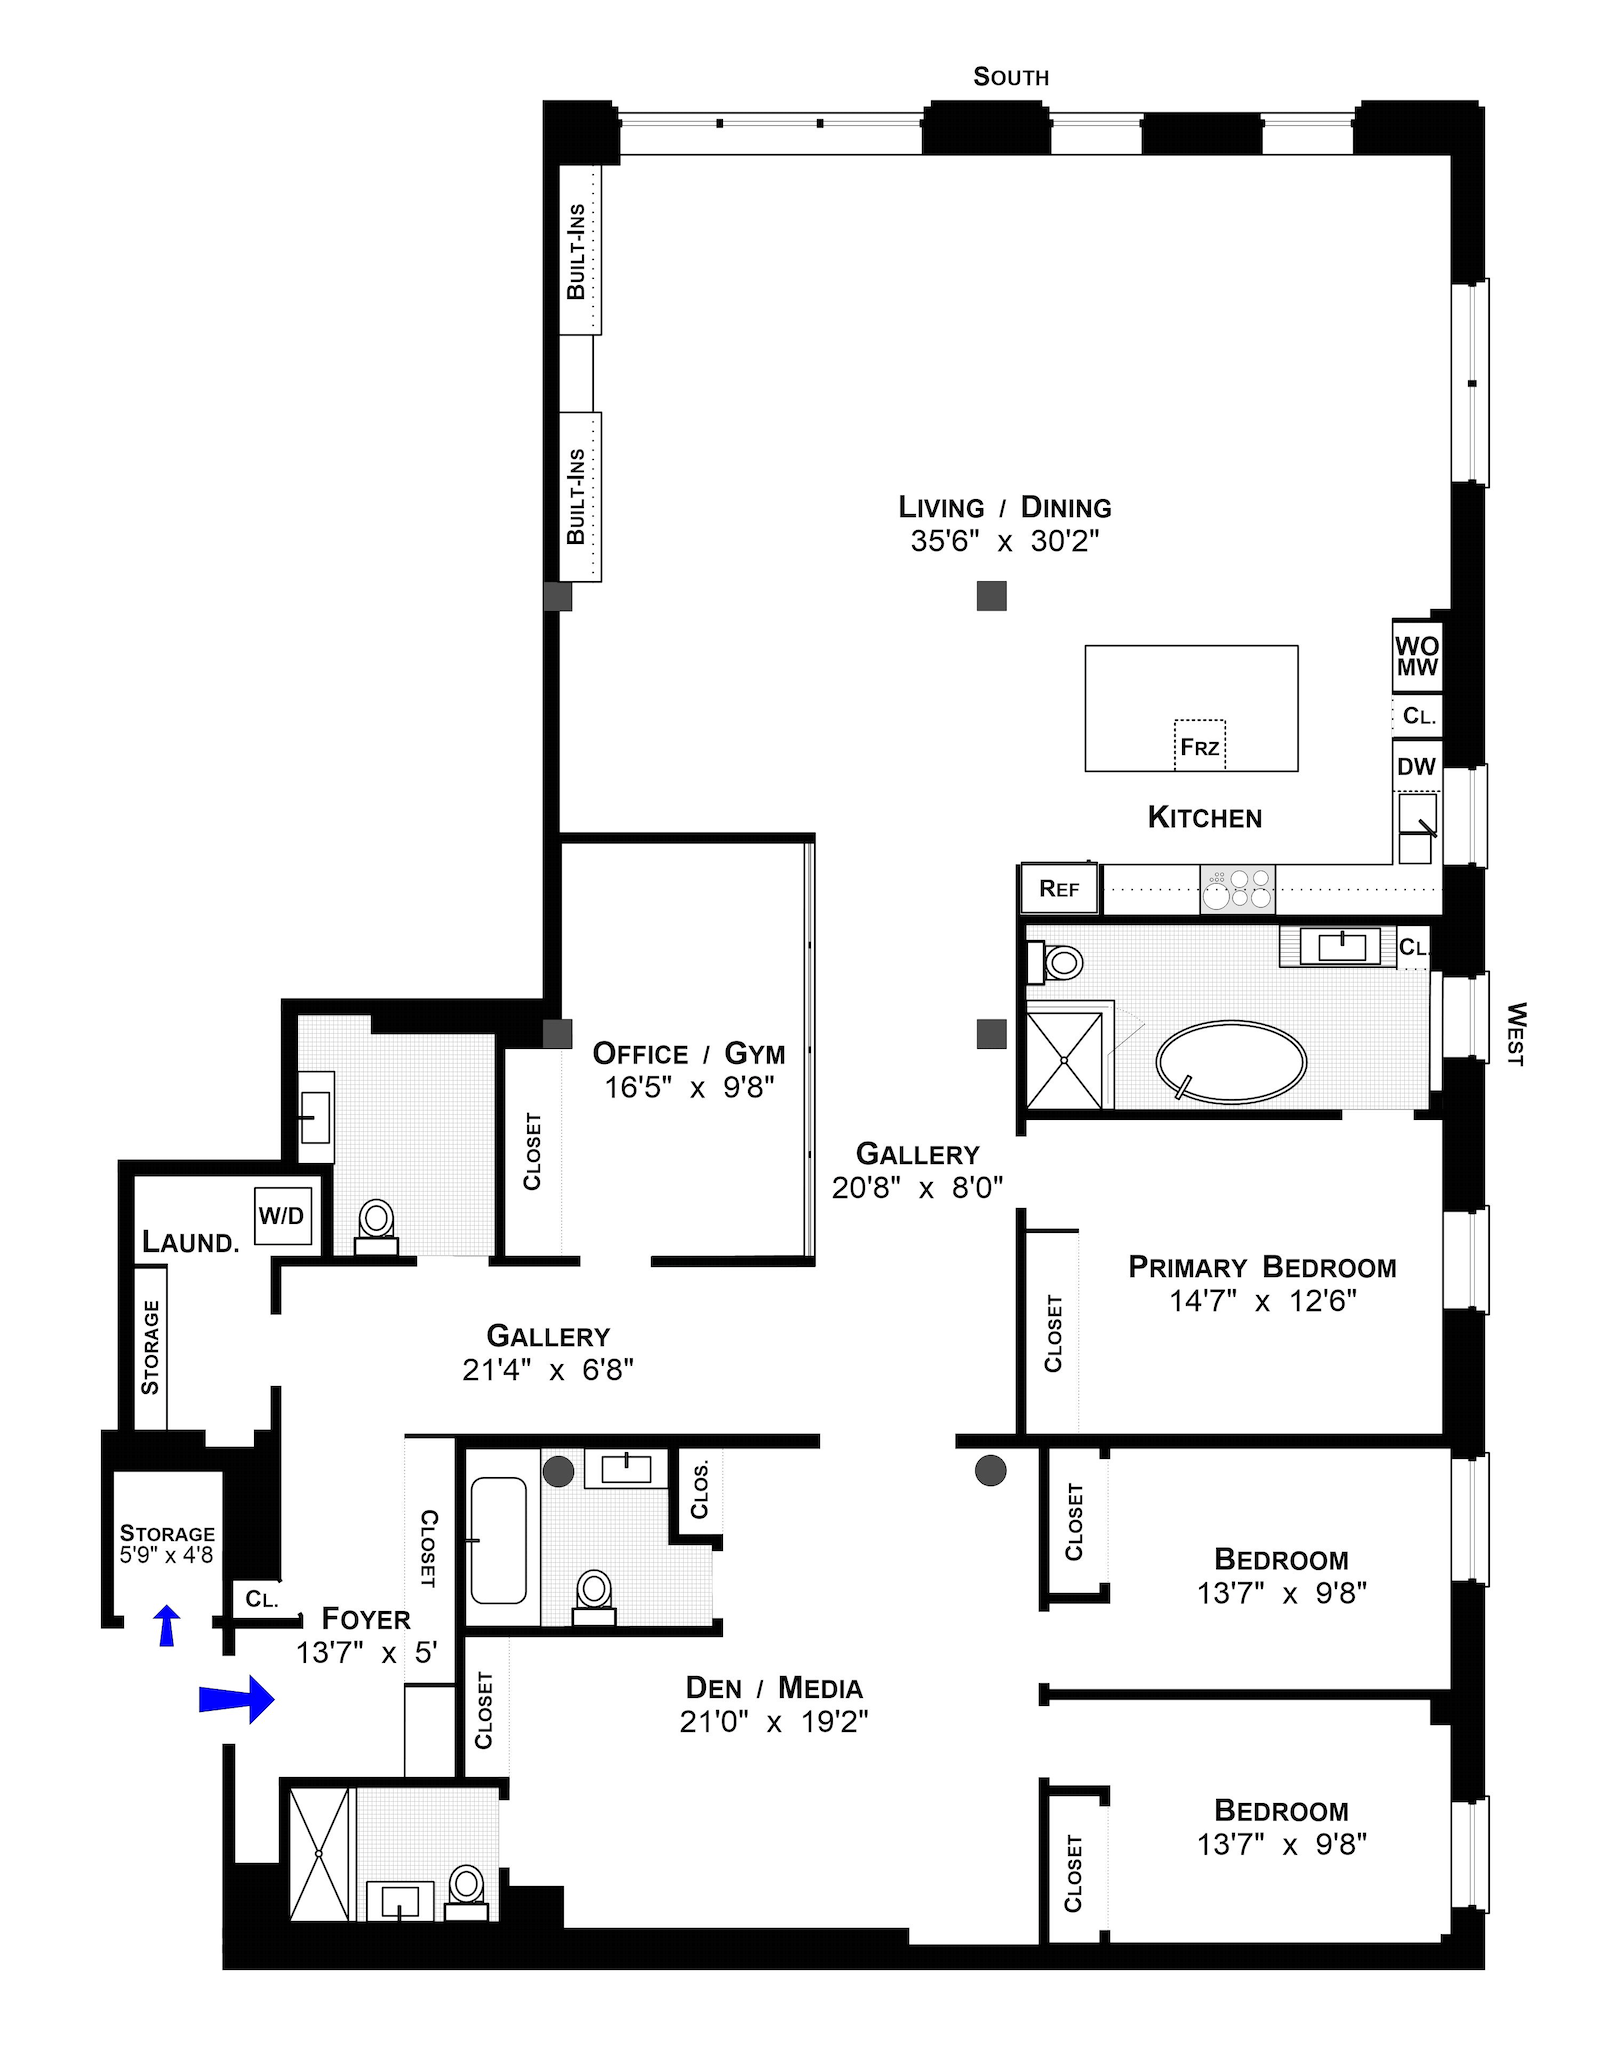 Floorplan for 145 6th Avenue